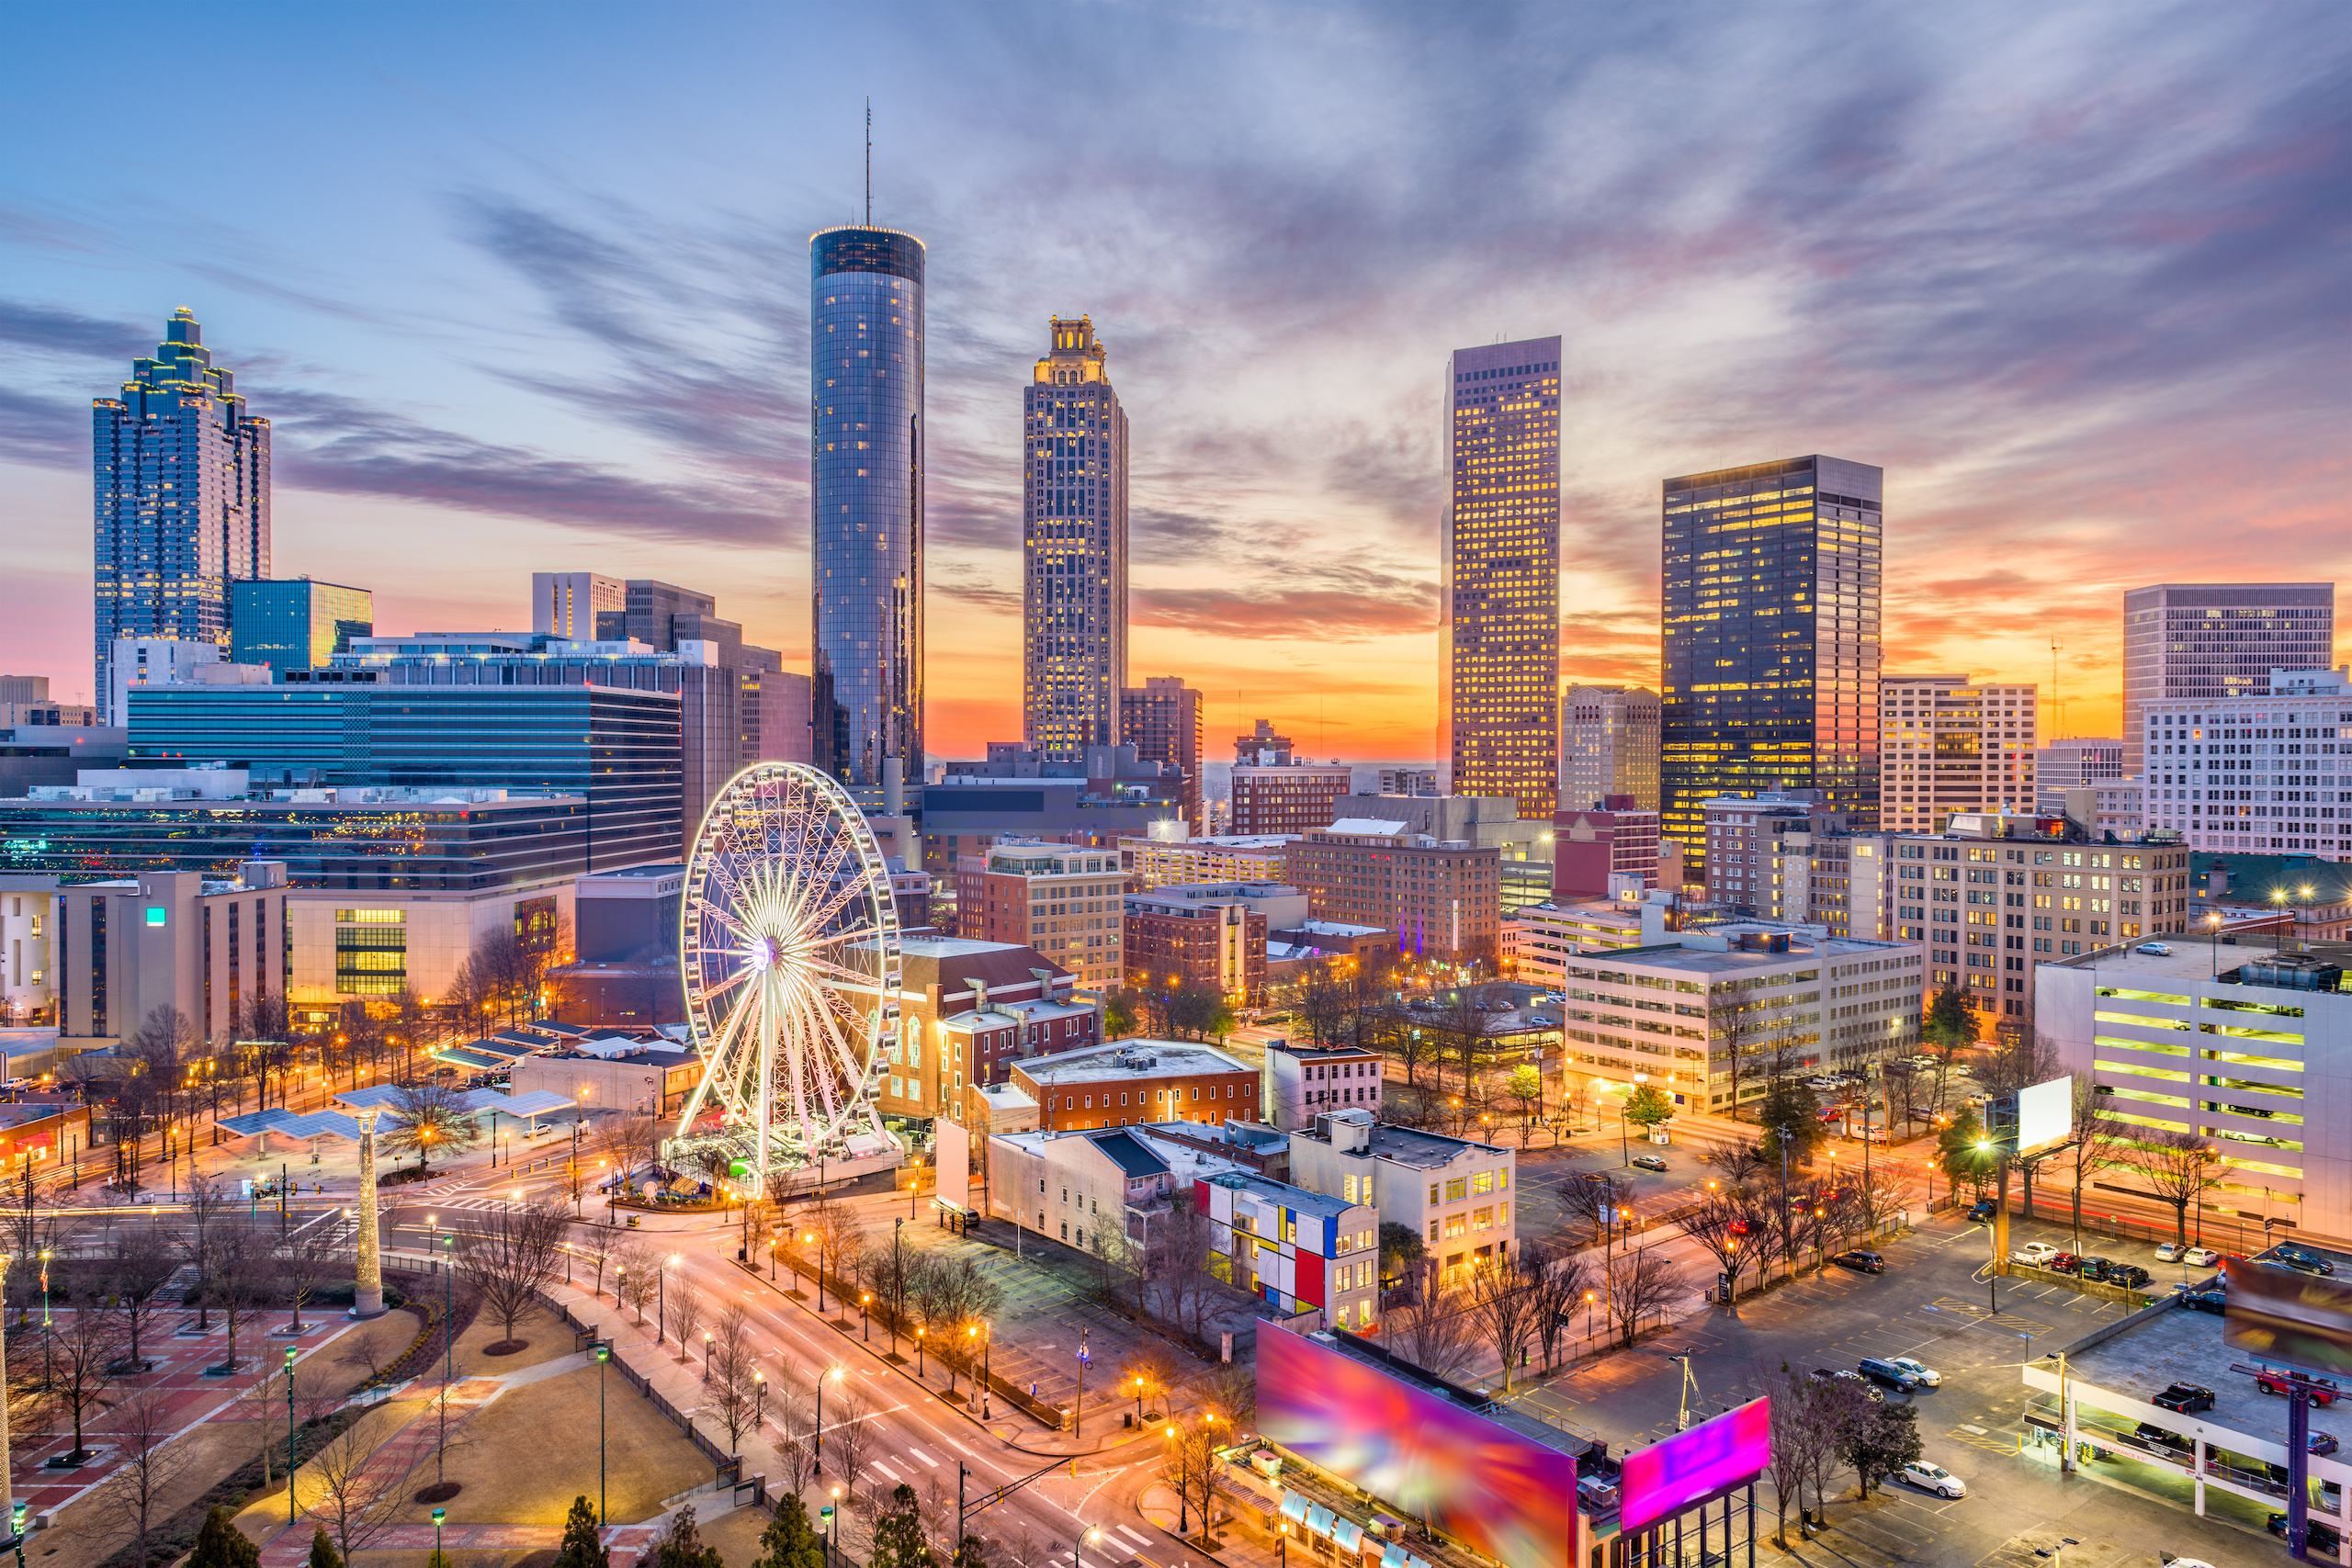 Atlanta, GA - A Great City to Work Remotely